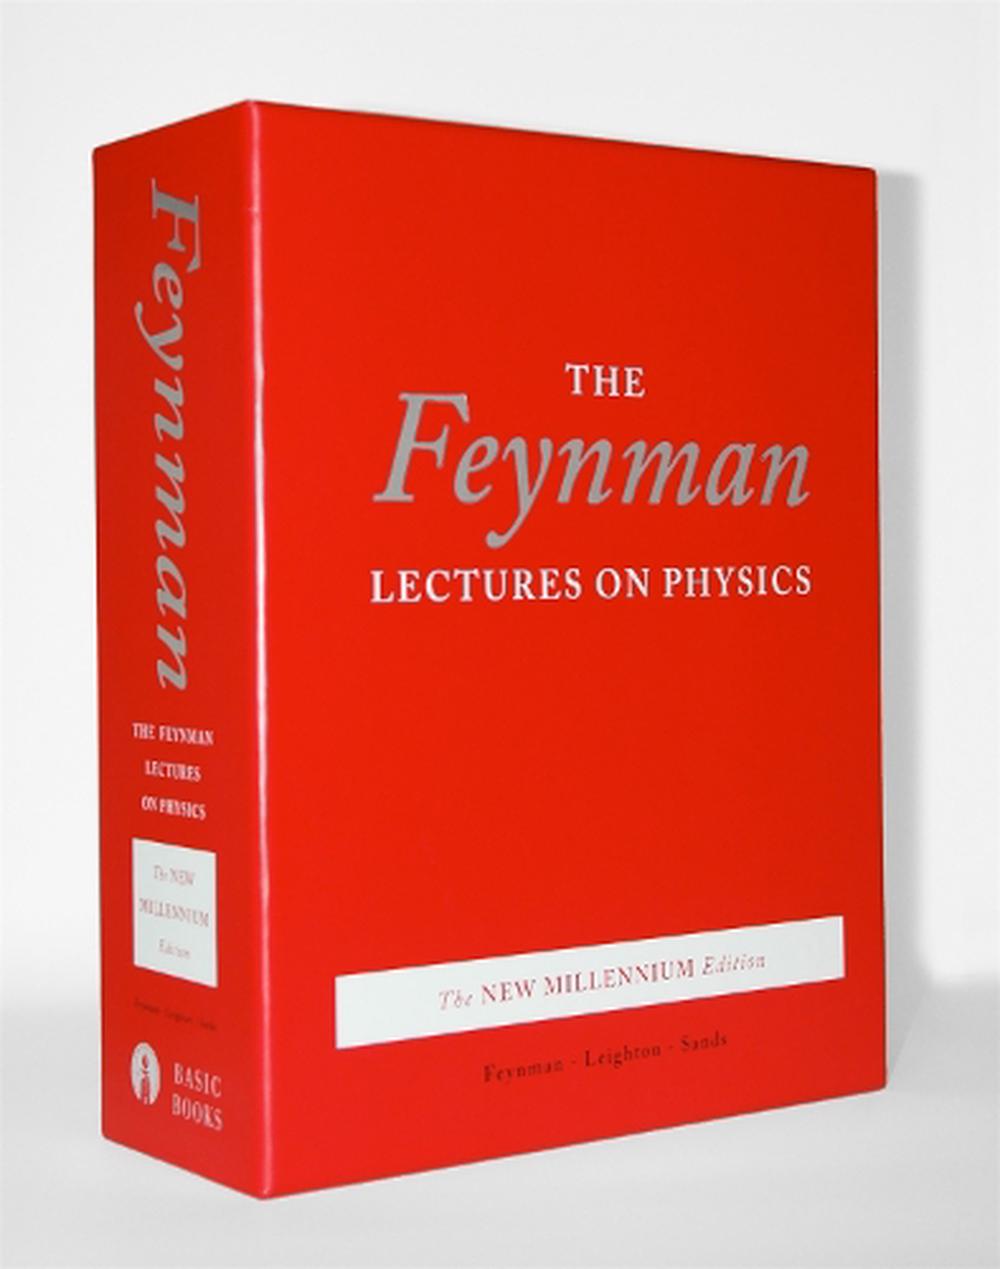 richard feynman lectures on physics